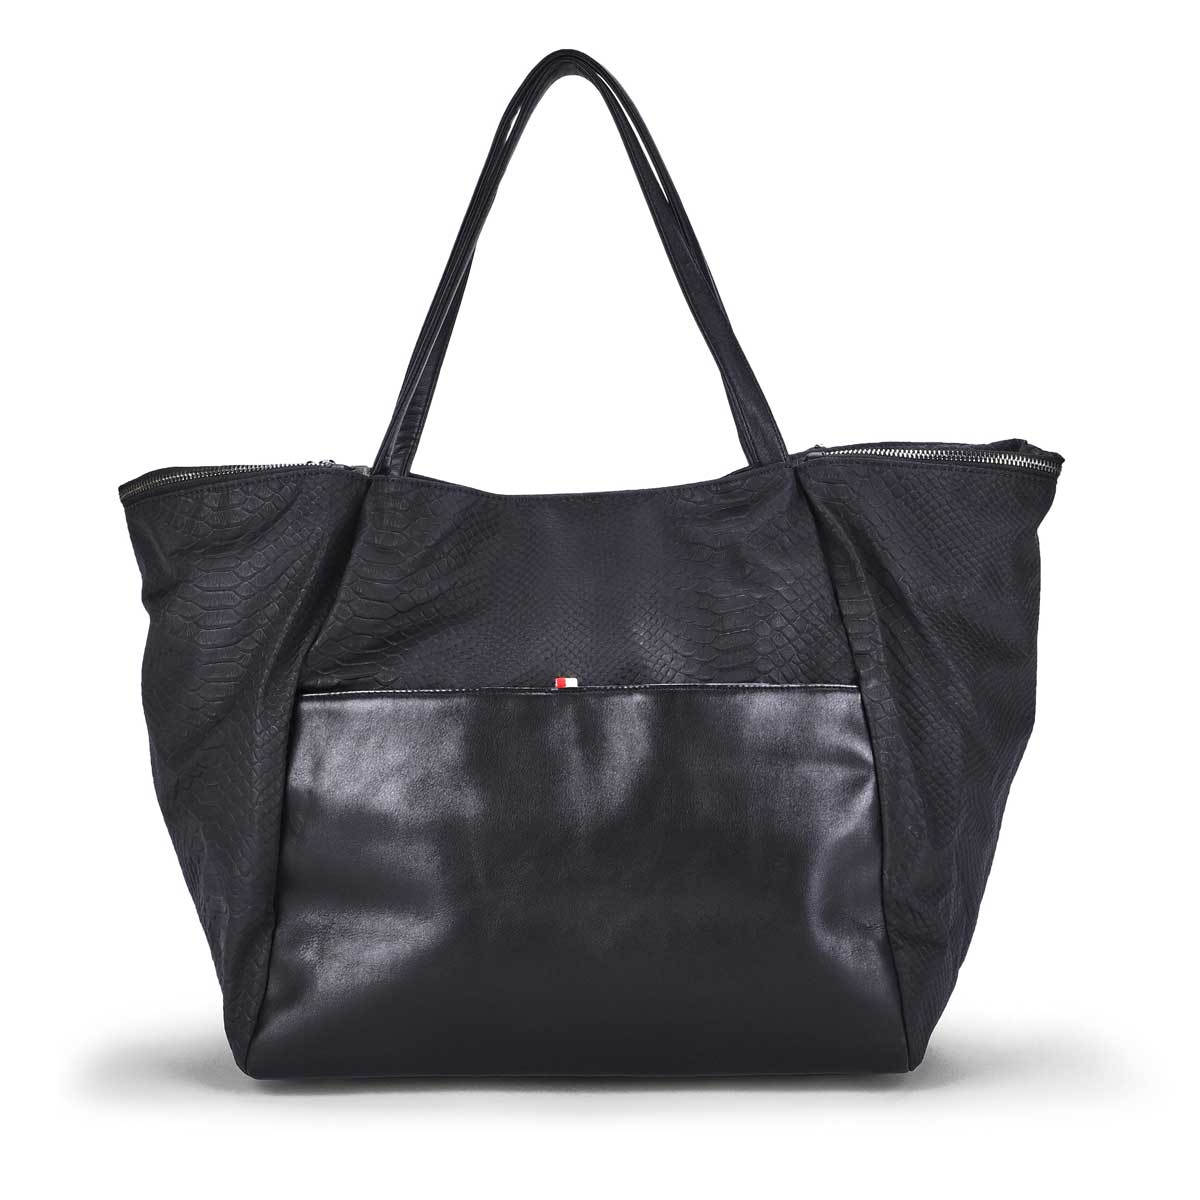 Women's Wave Tote Bag - Black